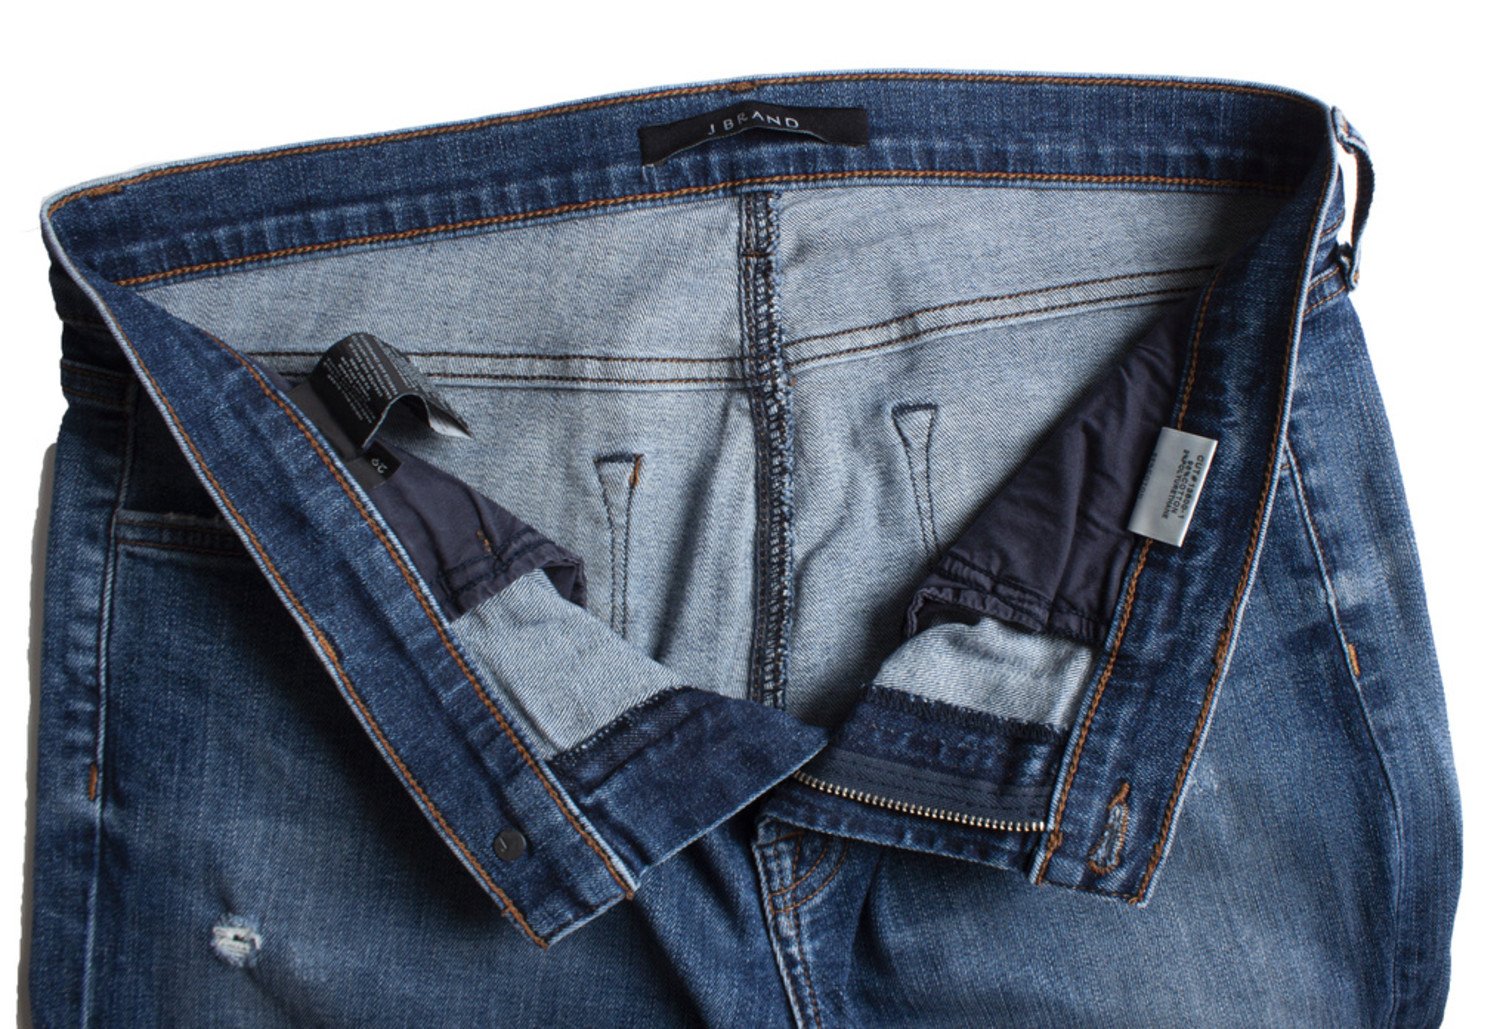 J Brand, Mid blue jeans with rips - Unique Designer Pieces